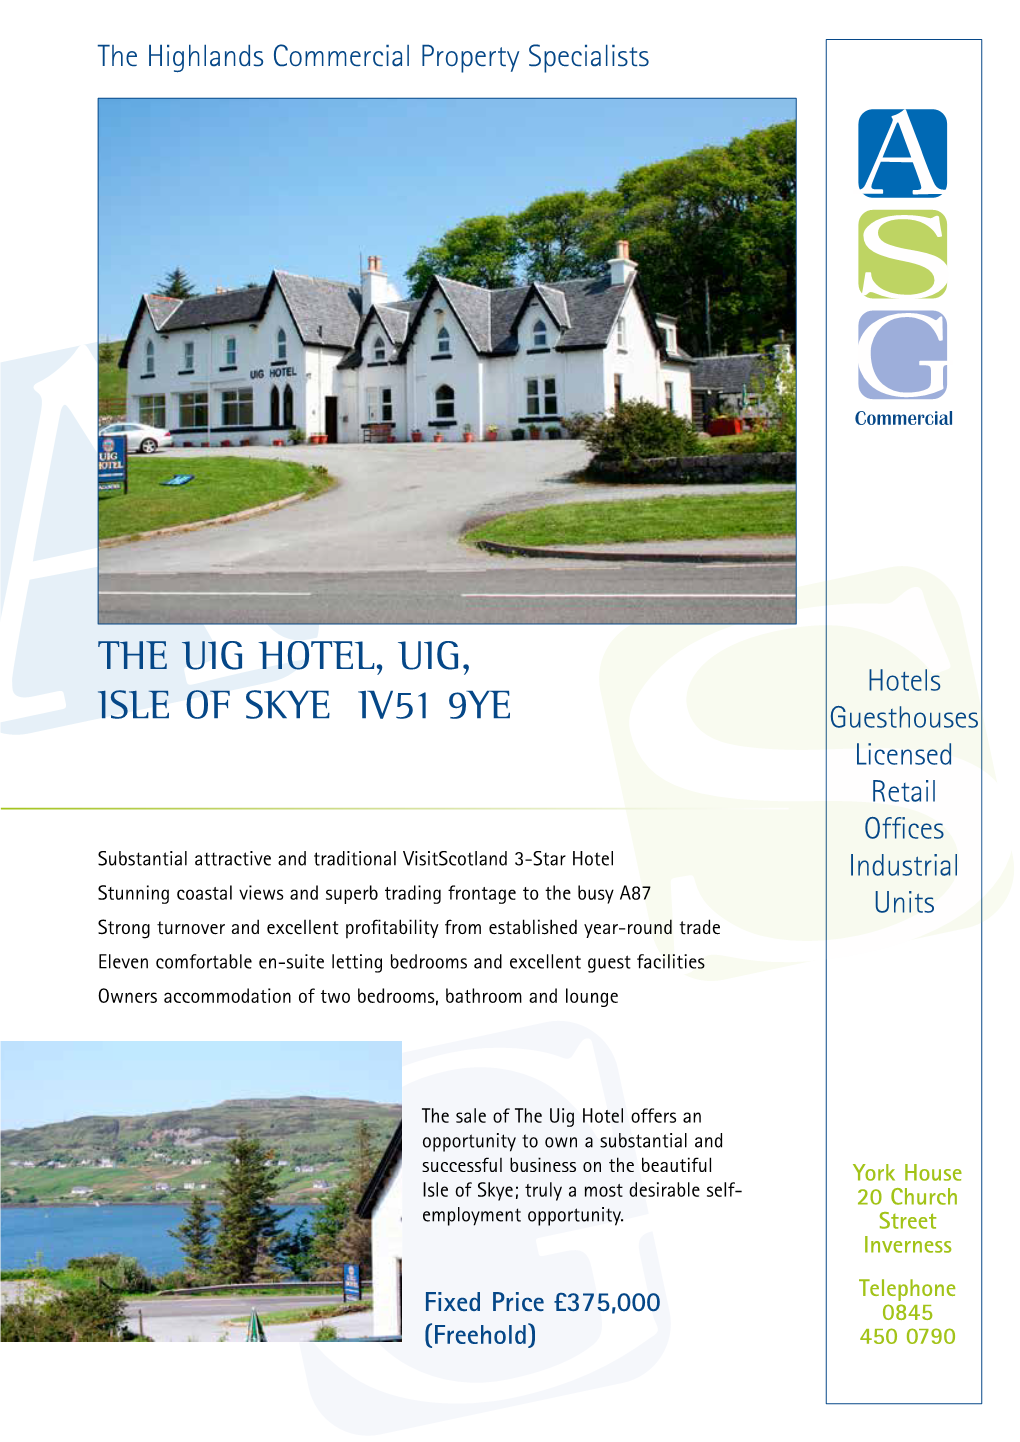 The Uig Hotel, Uig, Isle of Skye Iv51